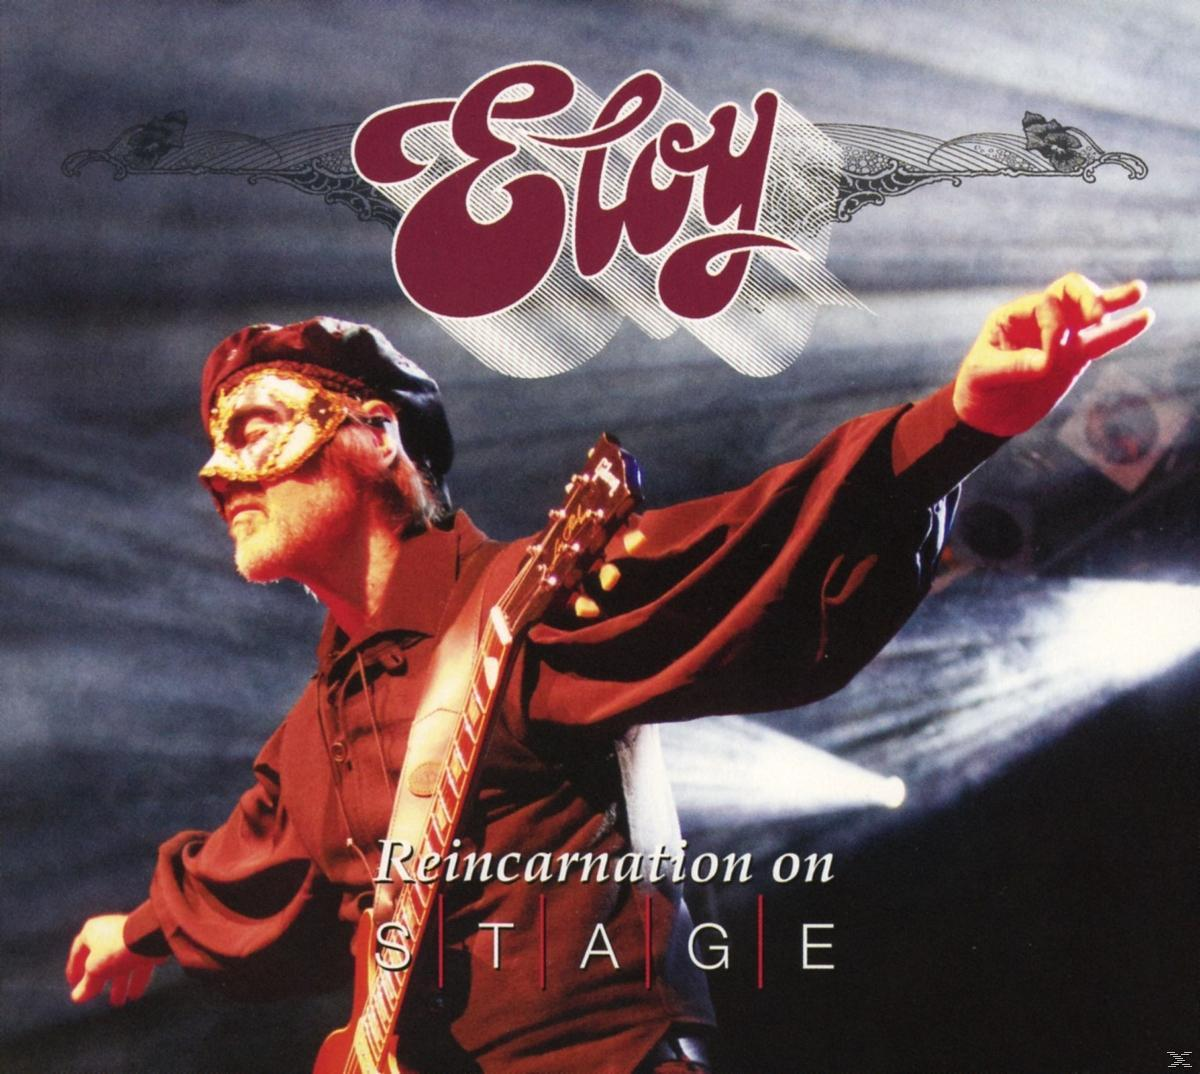 On - Stage Reincarnation (Live) Eloy (CD) -